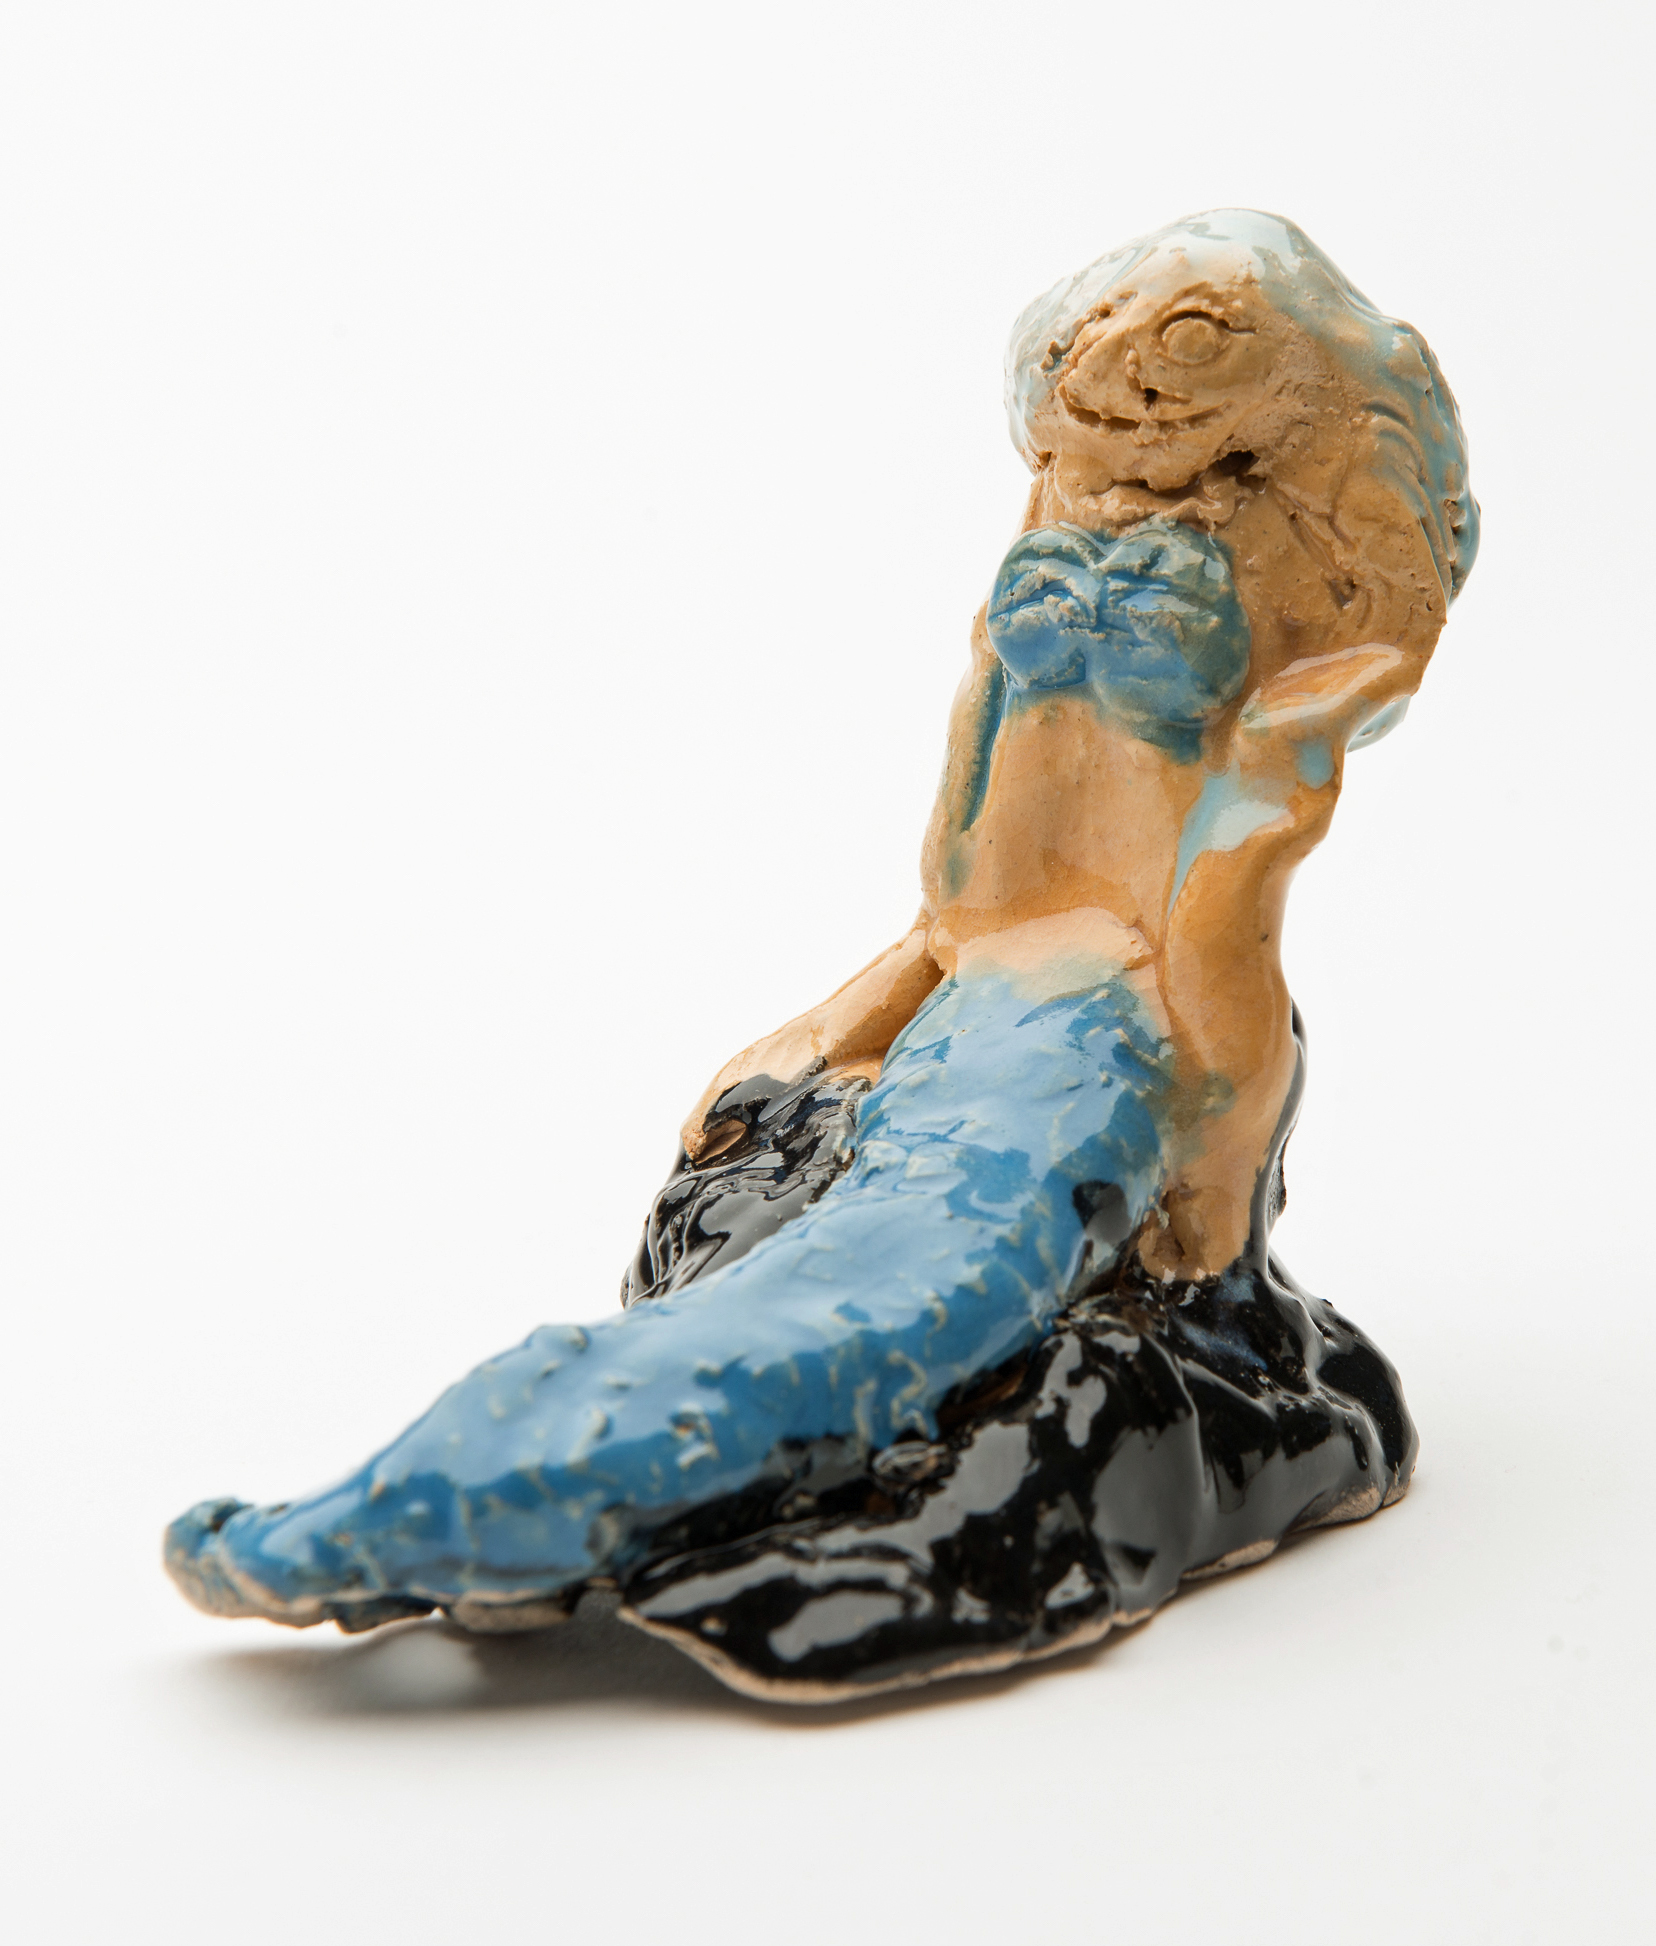 4 Ceramic Mermaid - Kids Like Clay.jpg